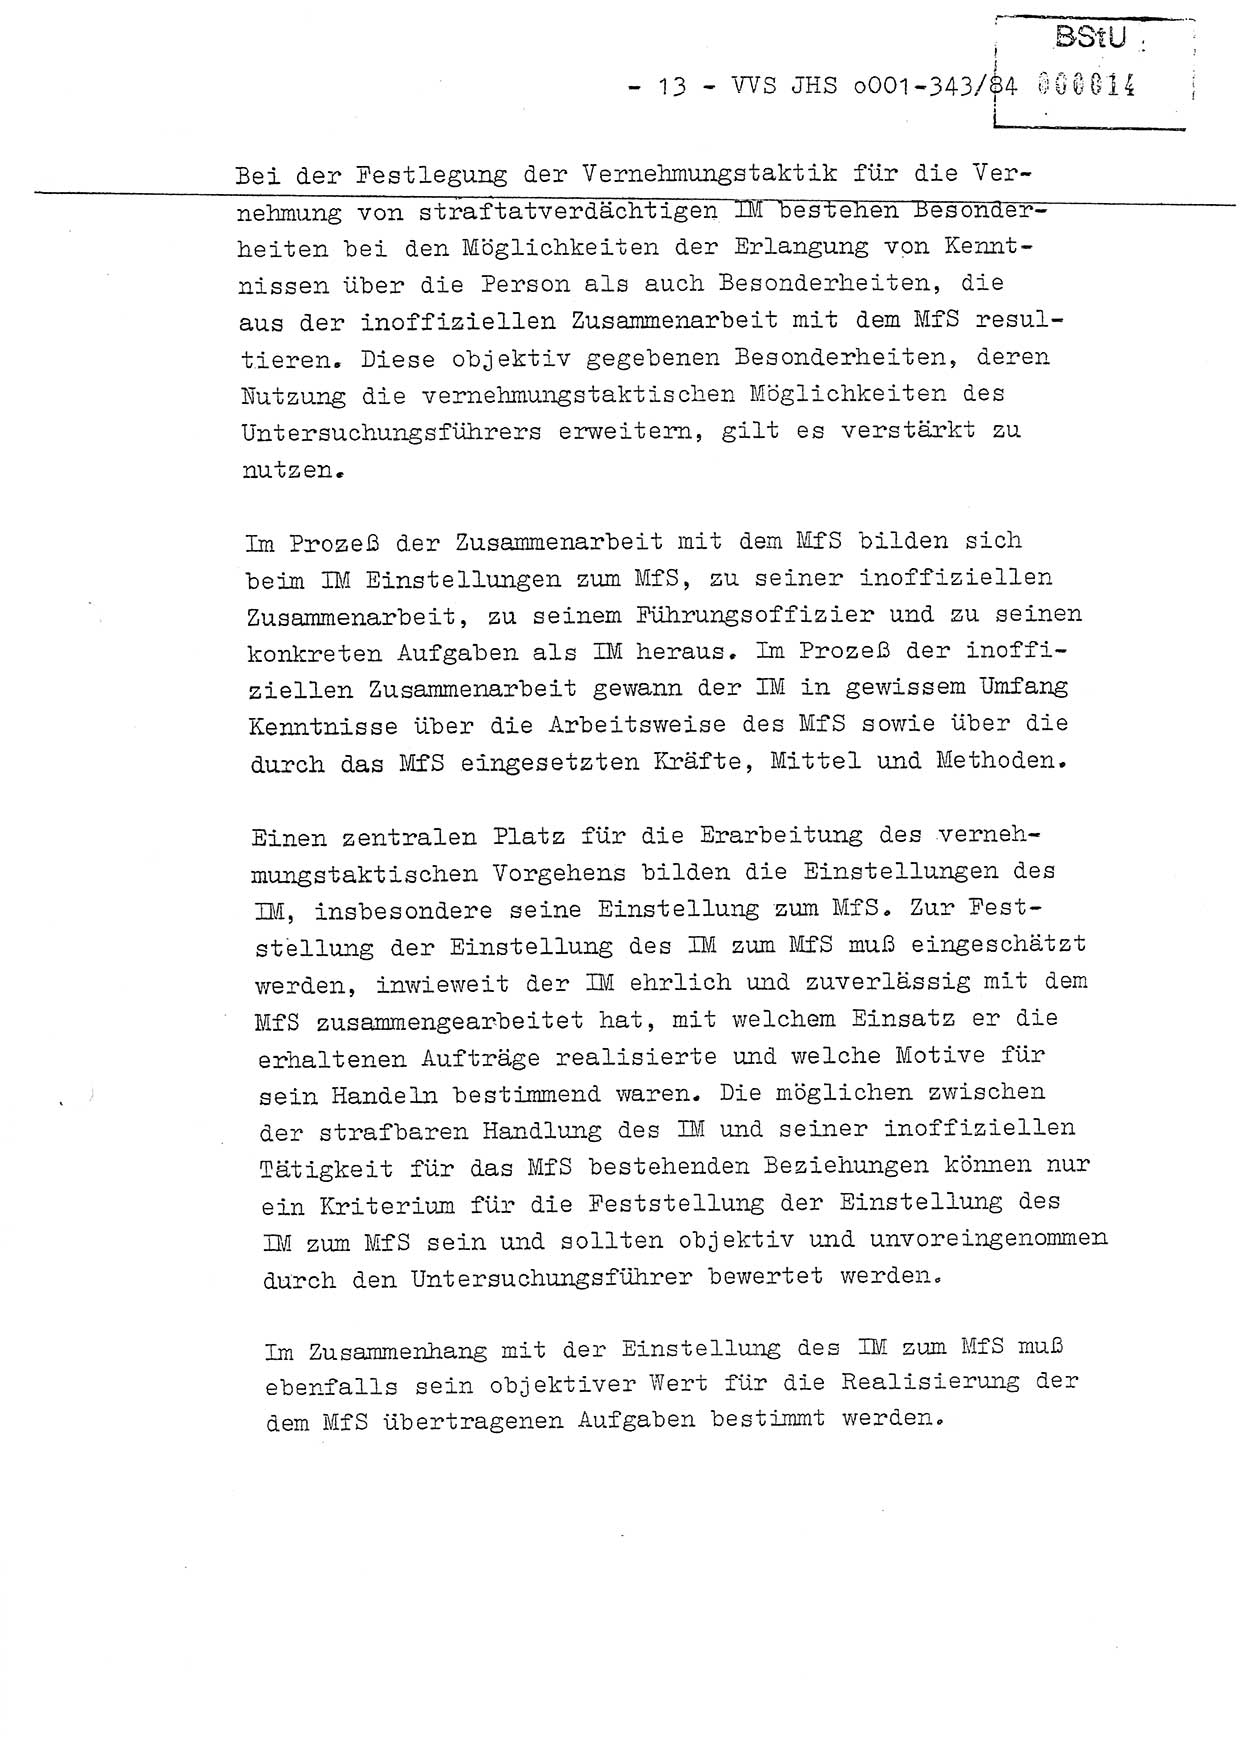 Diplomarbeit, Oberleutnant Bernd Michael (HA Ⅸ/5), Oberleutnant Peter Felber (HA IX/5), Ministerium für Staatssicherheit (MfS) [Deutsche Demokratische Republik (DDR)], Juristische Hochschule (JHS), Vertrauliche Verschlußsache (VVS) o001-343/84, Potsdam 1985, Seite 13 (Dipl.-Arb. MfS DDR JHS VVS o001-343/84 1985, S. 13)